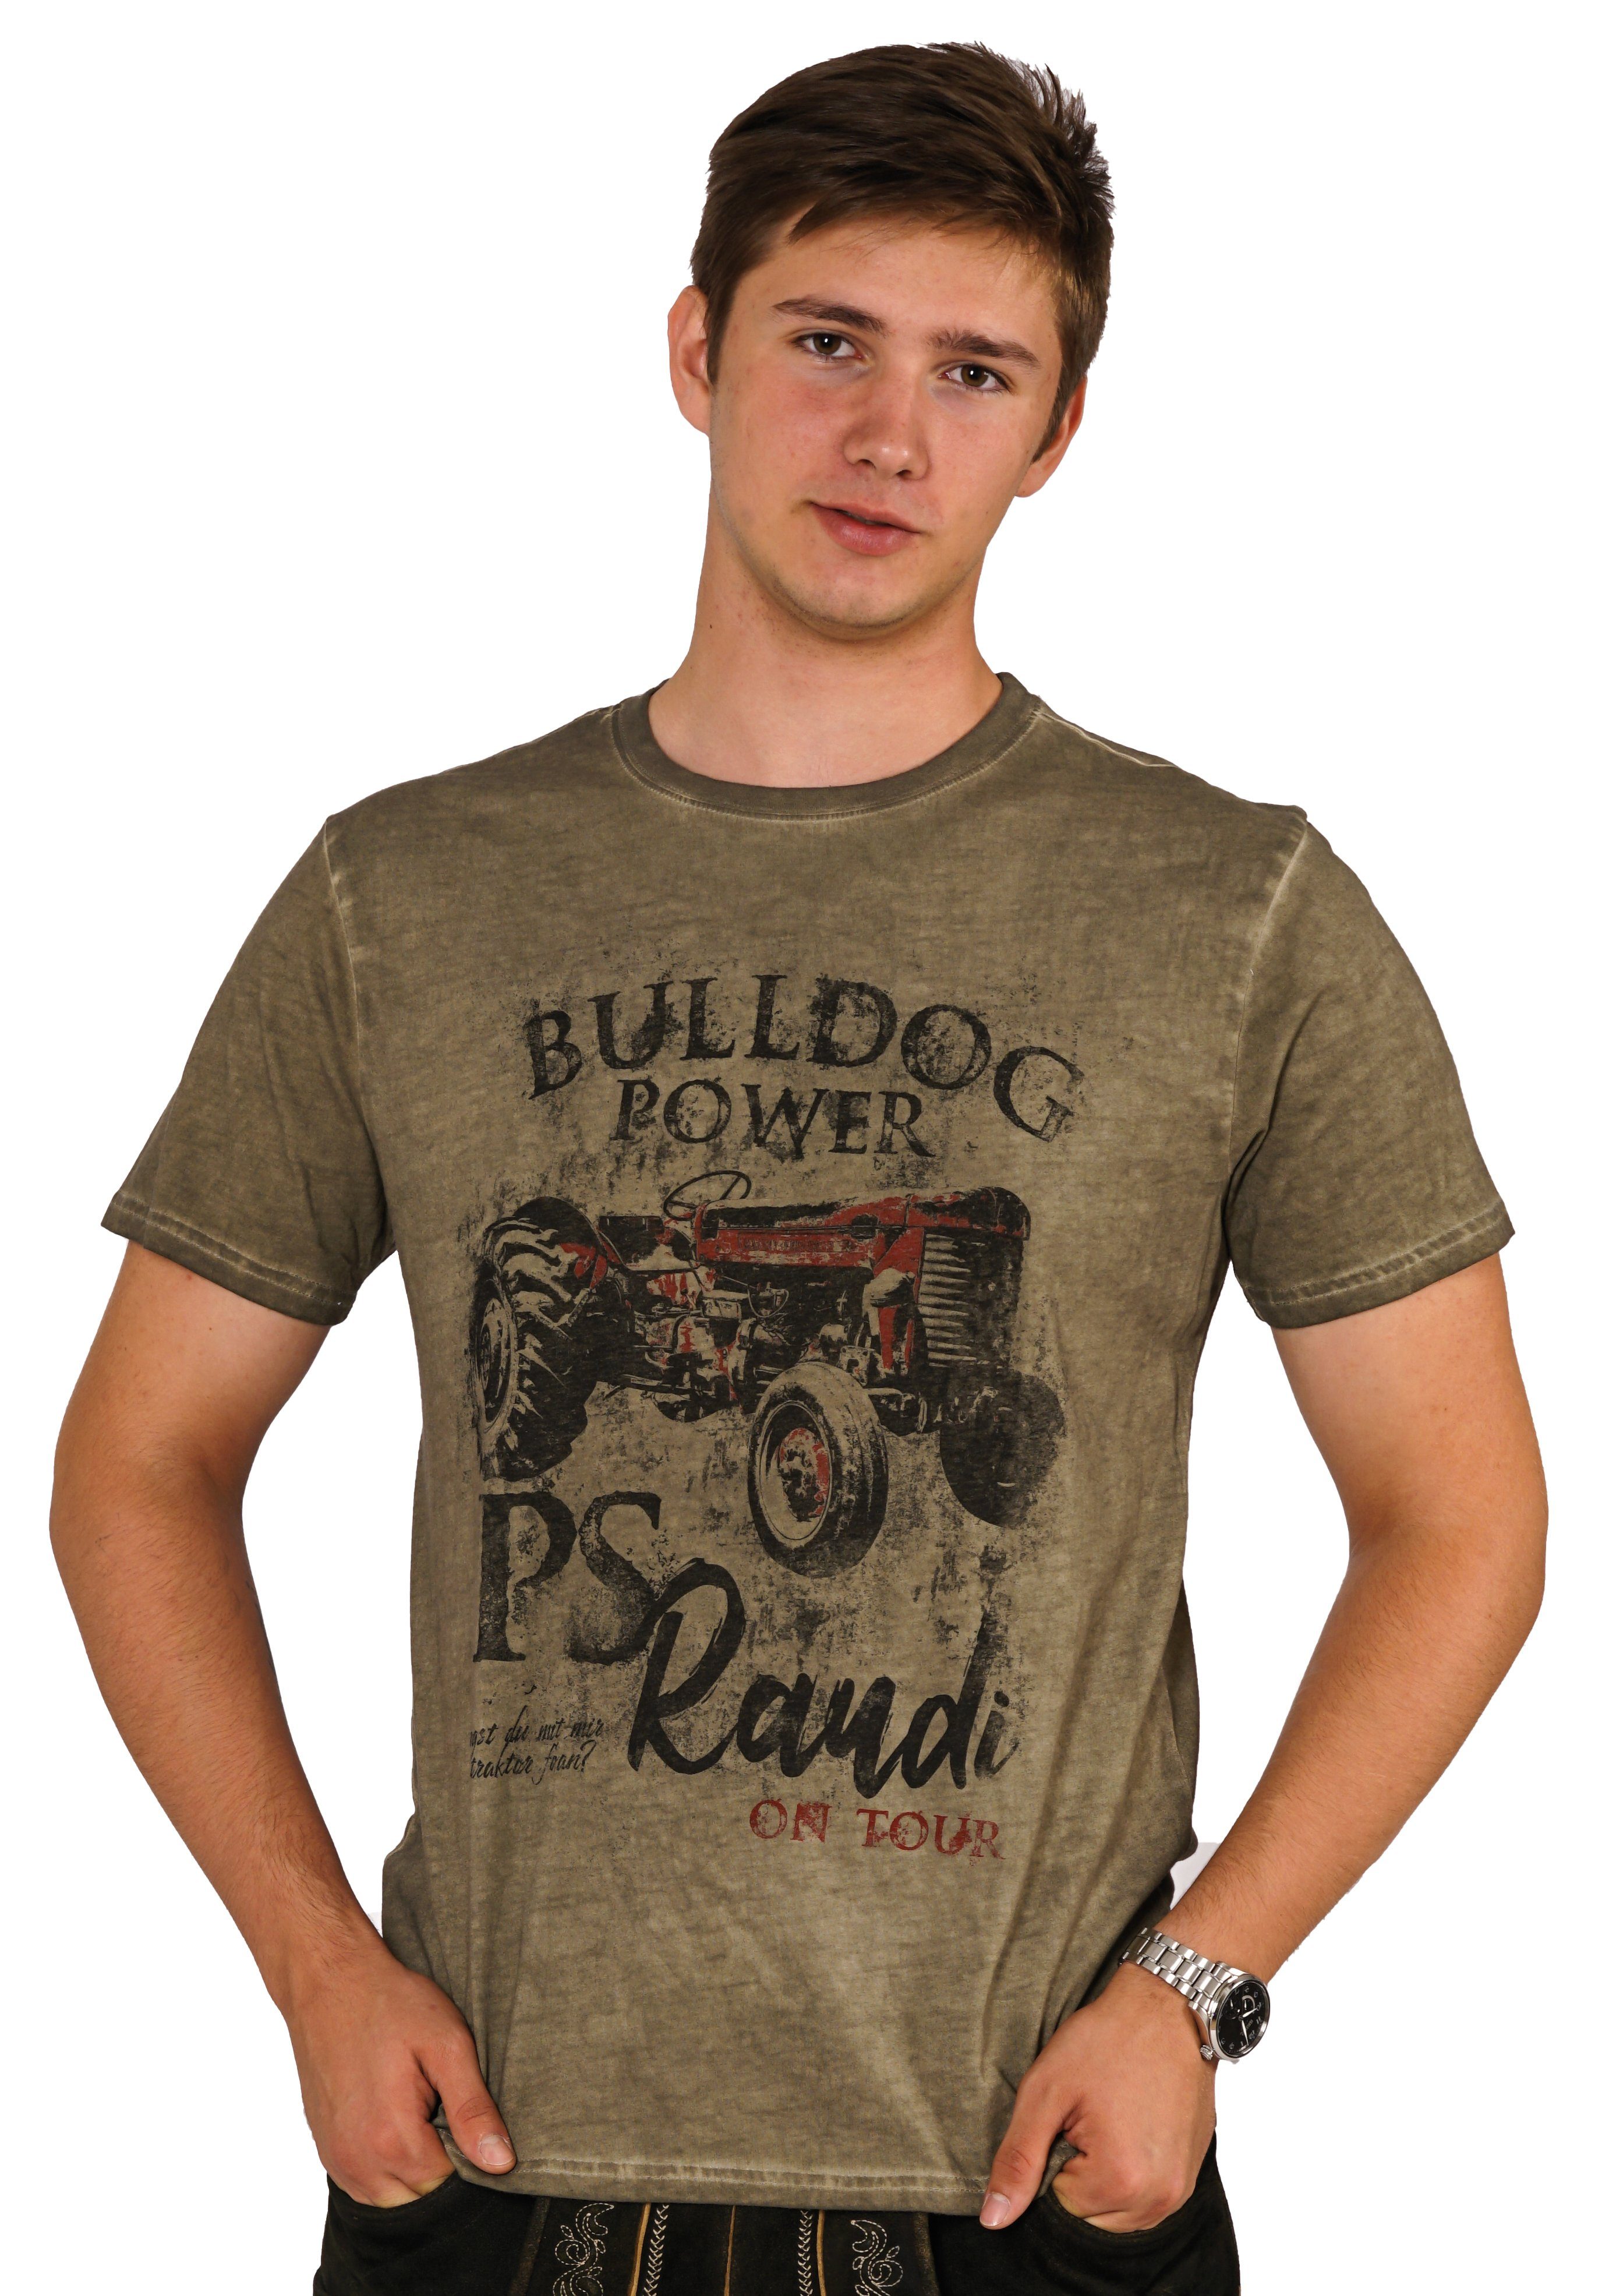 Soreso® Trachtenshirt Bulldog Power PS Raudi on Tour Khaki